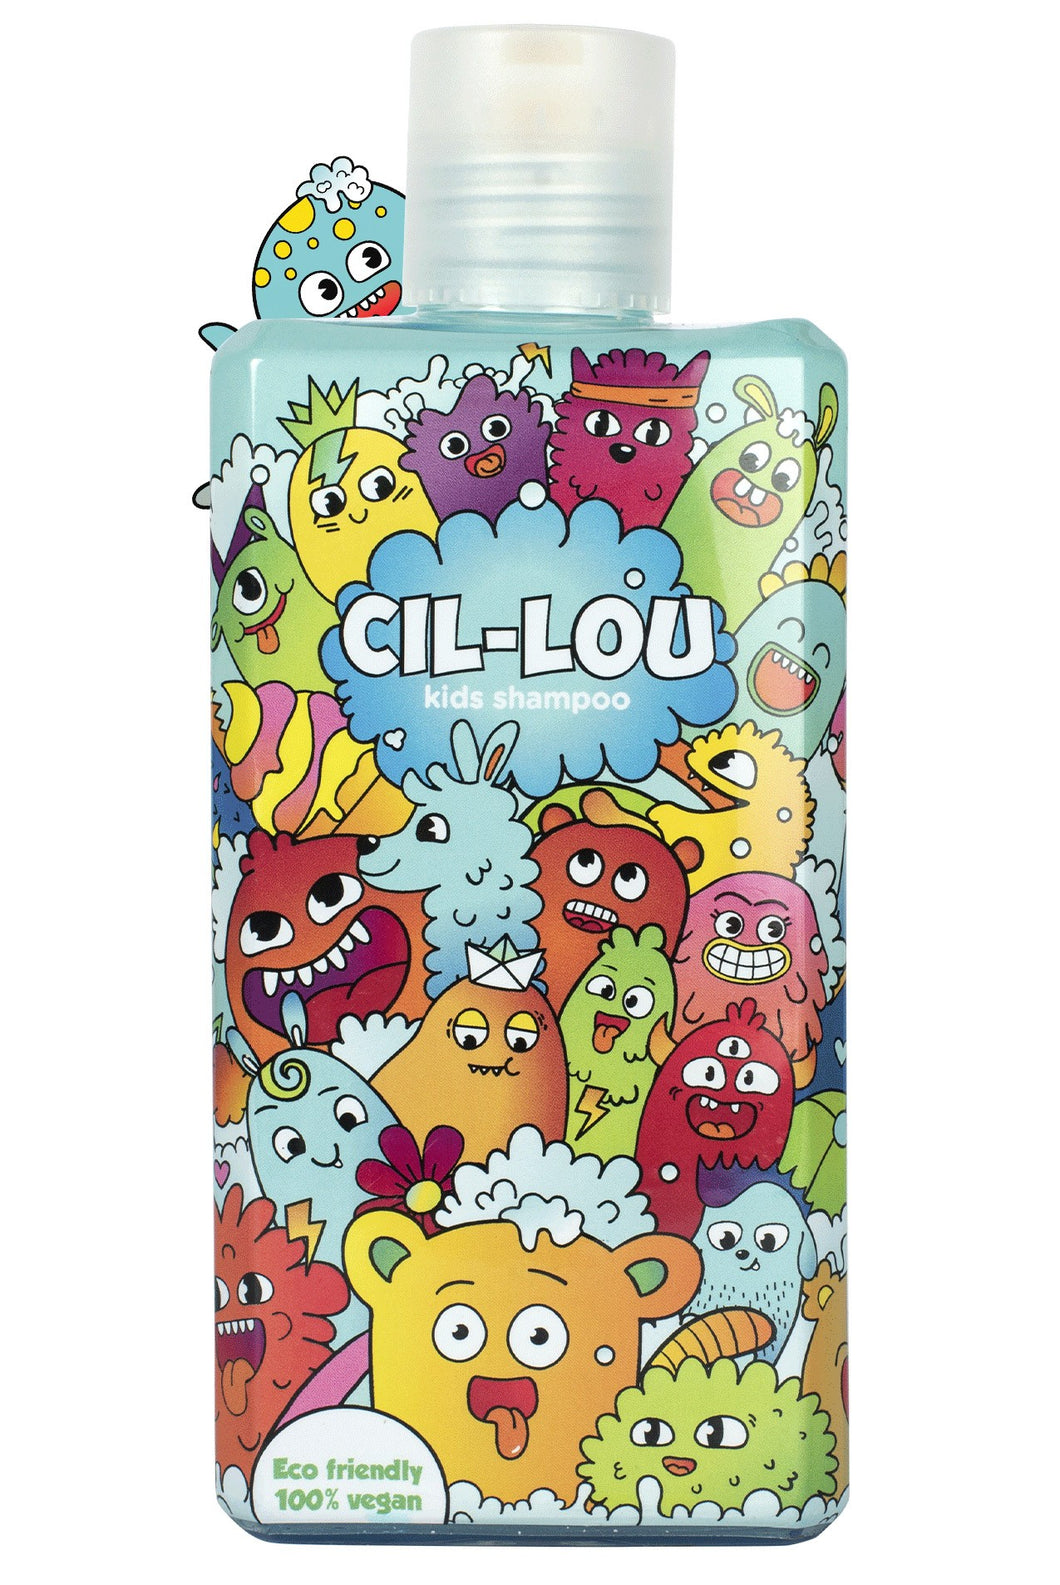 Cil-Lou - Kids shampoo - Octo